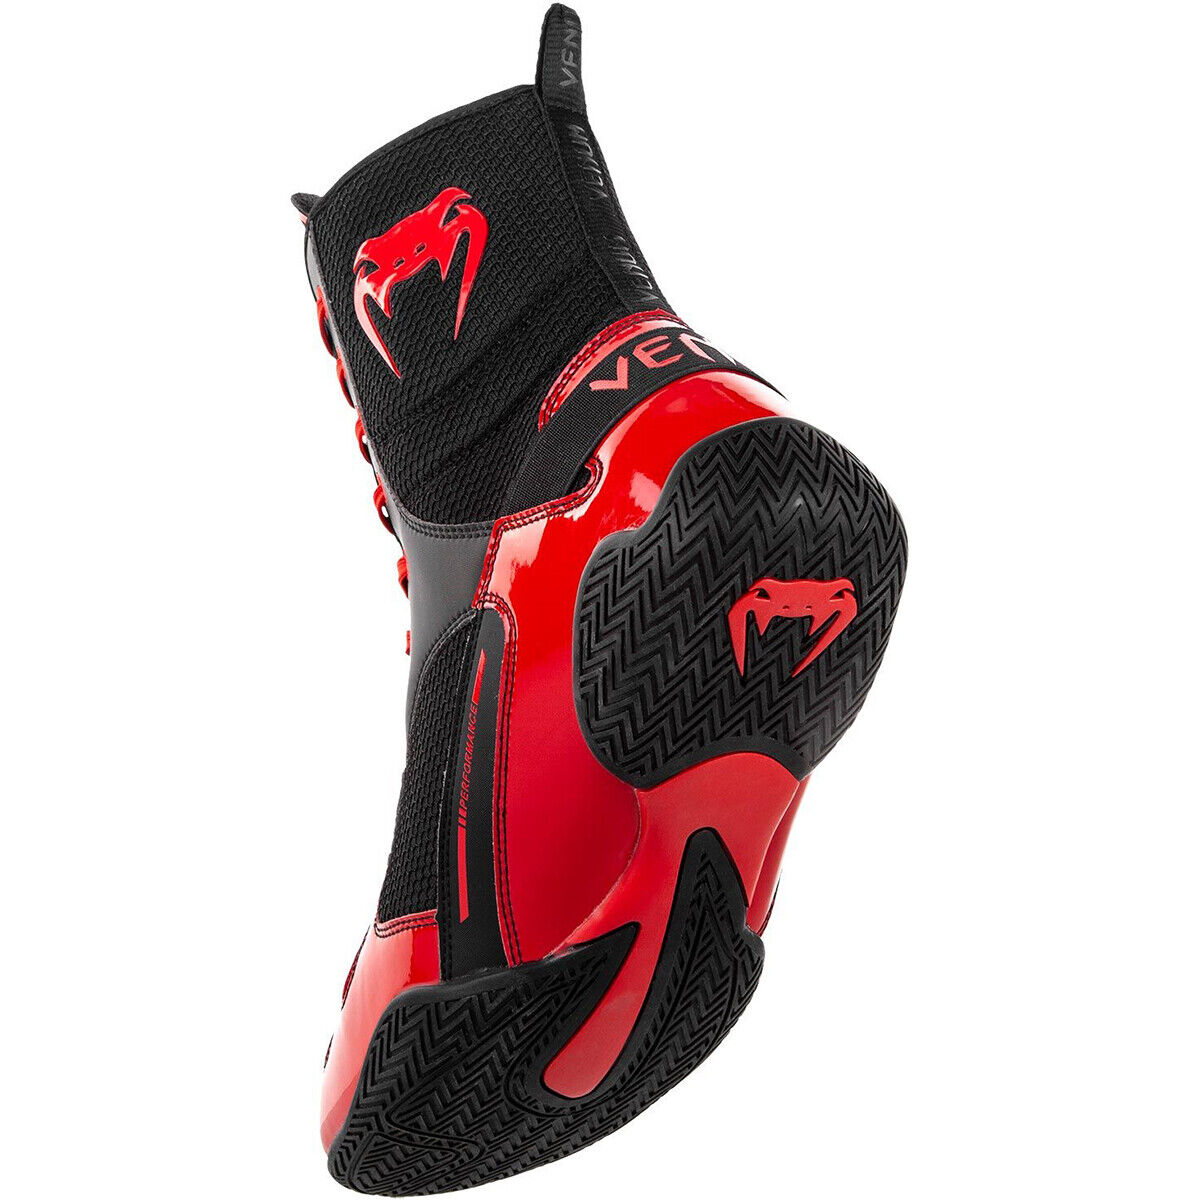 Venum Elite Professional Boxing Shoes - Black/Red | eBay